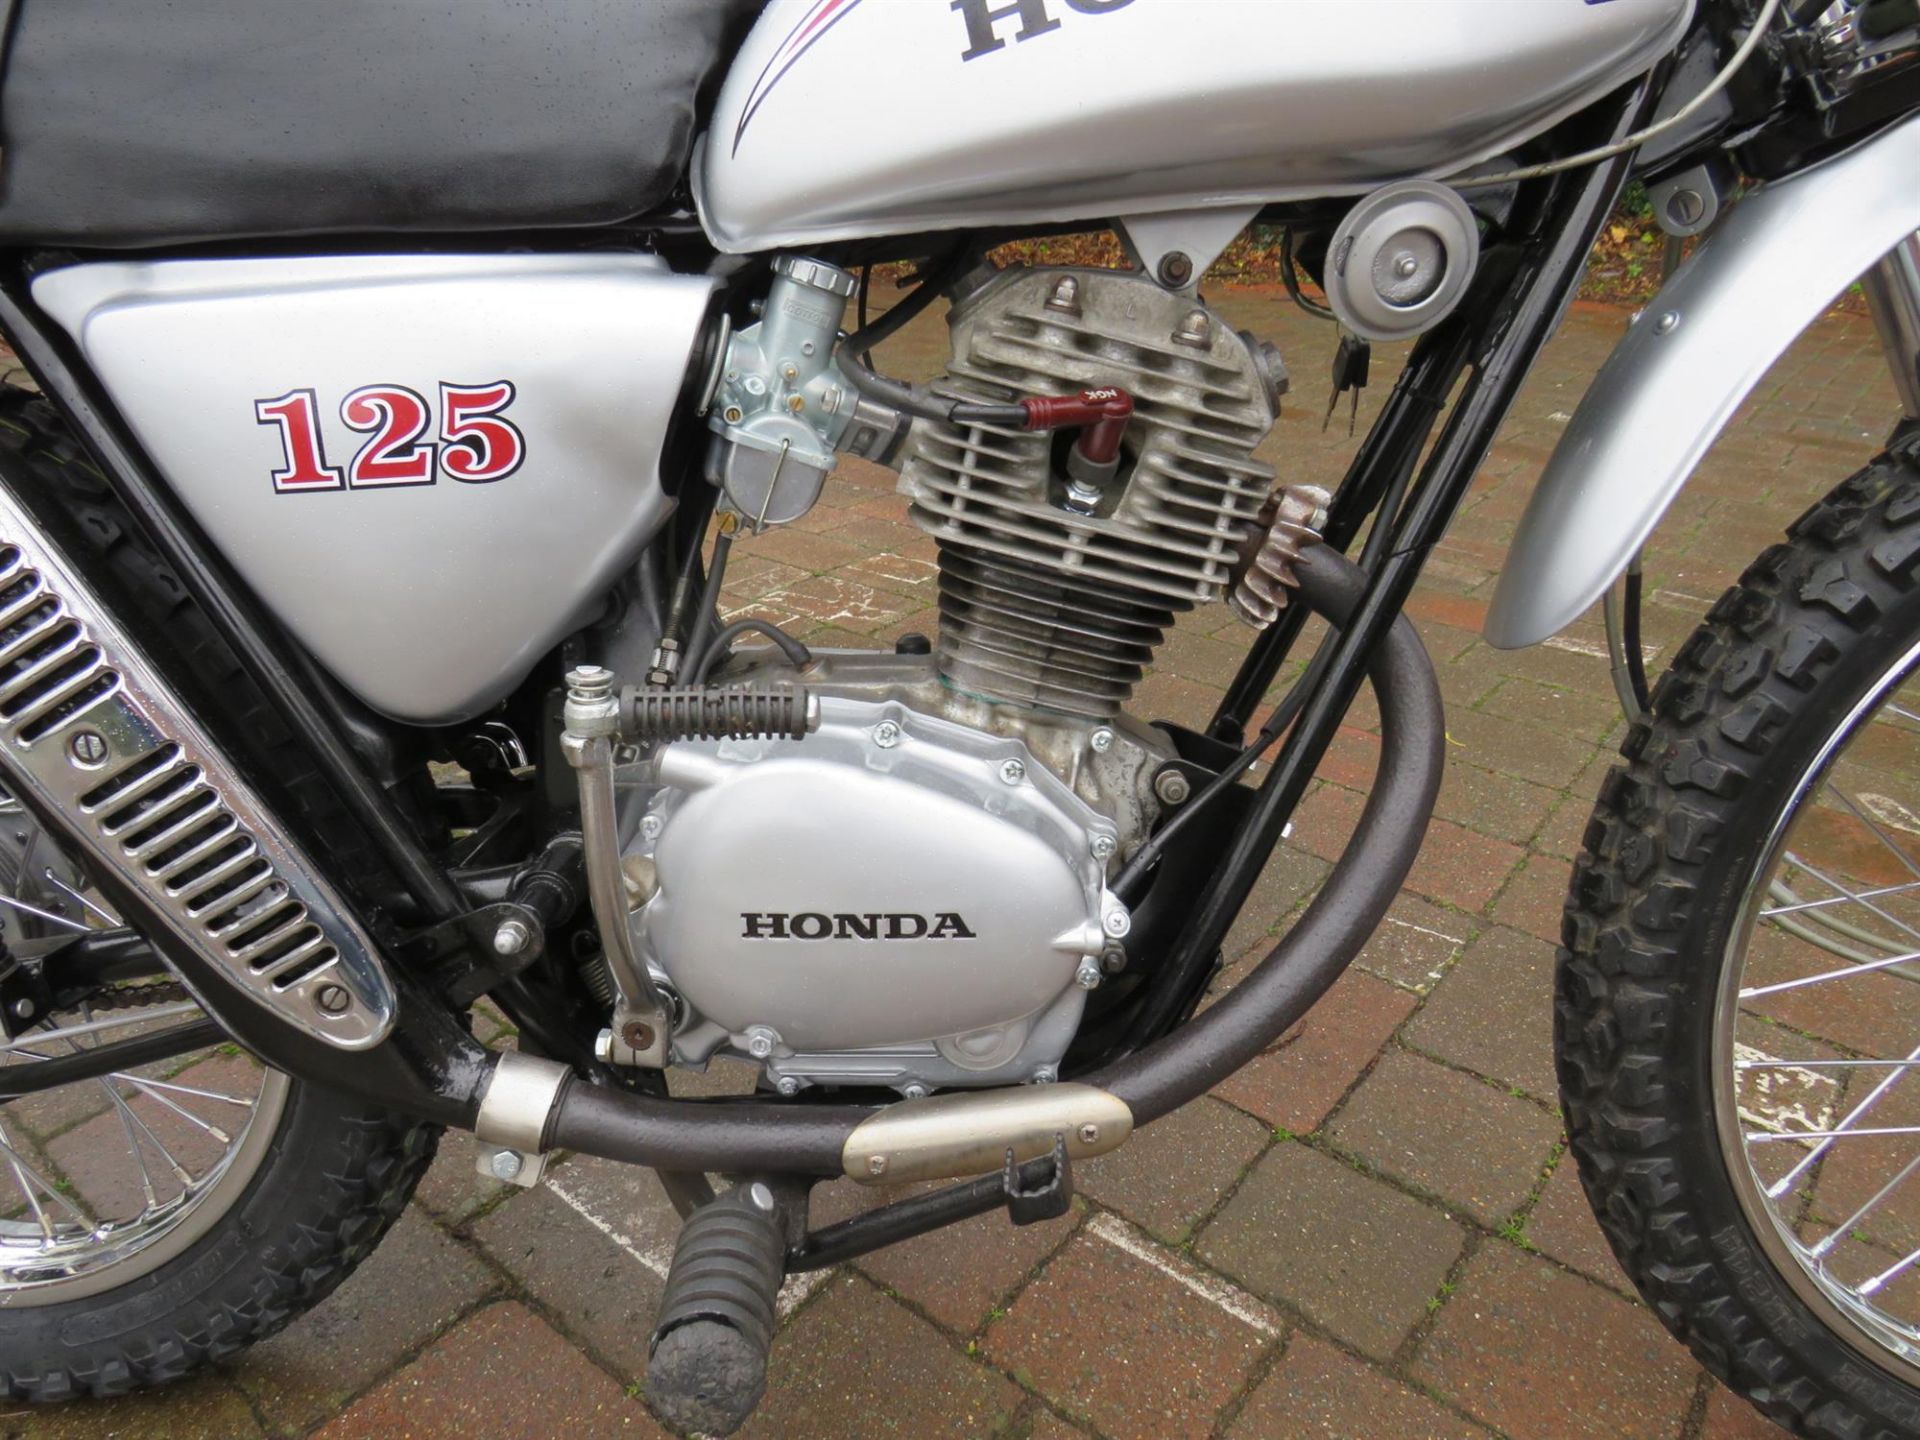 1973 Honda SL125 K1 Motosport 122cc - Image 3 of 10